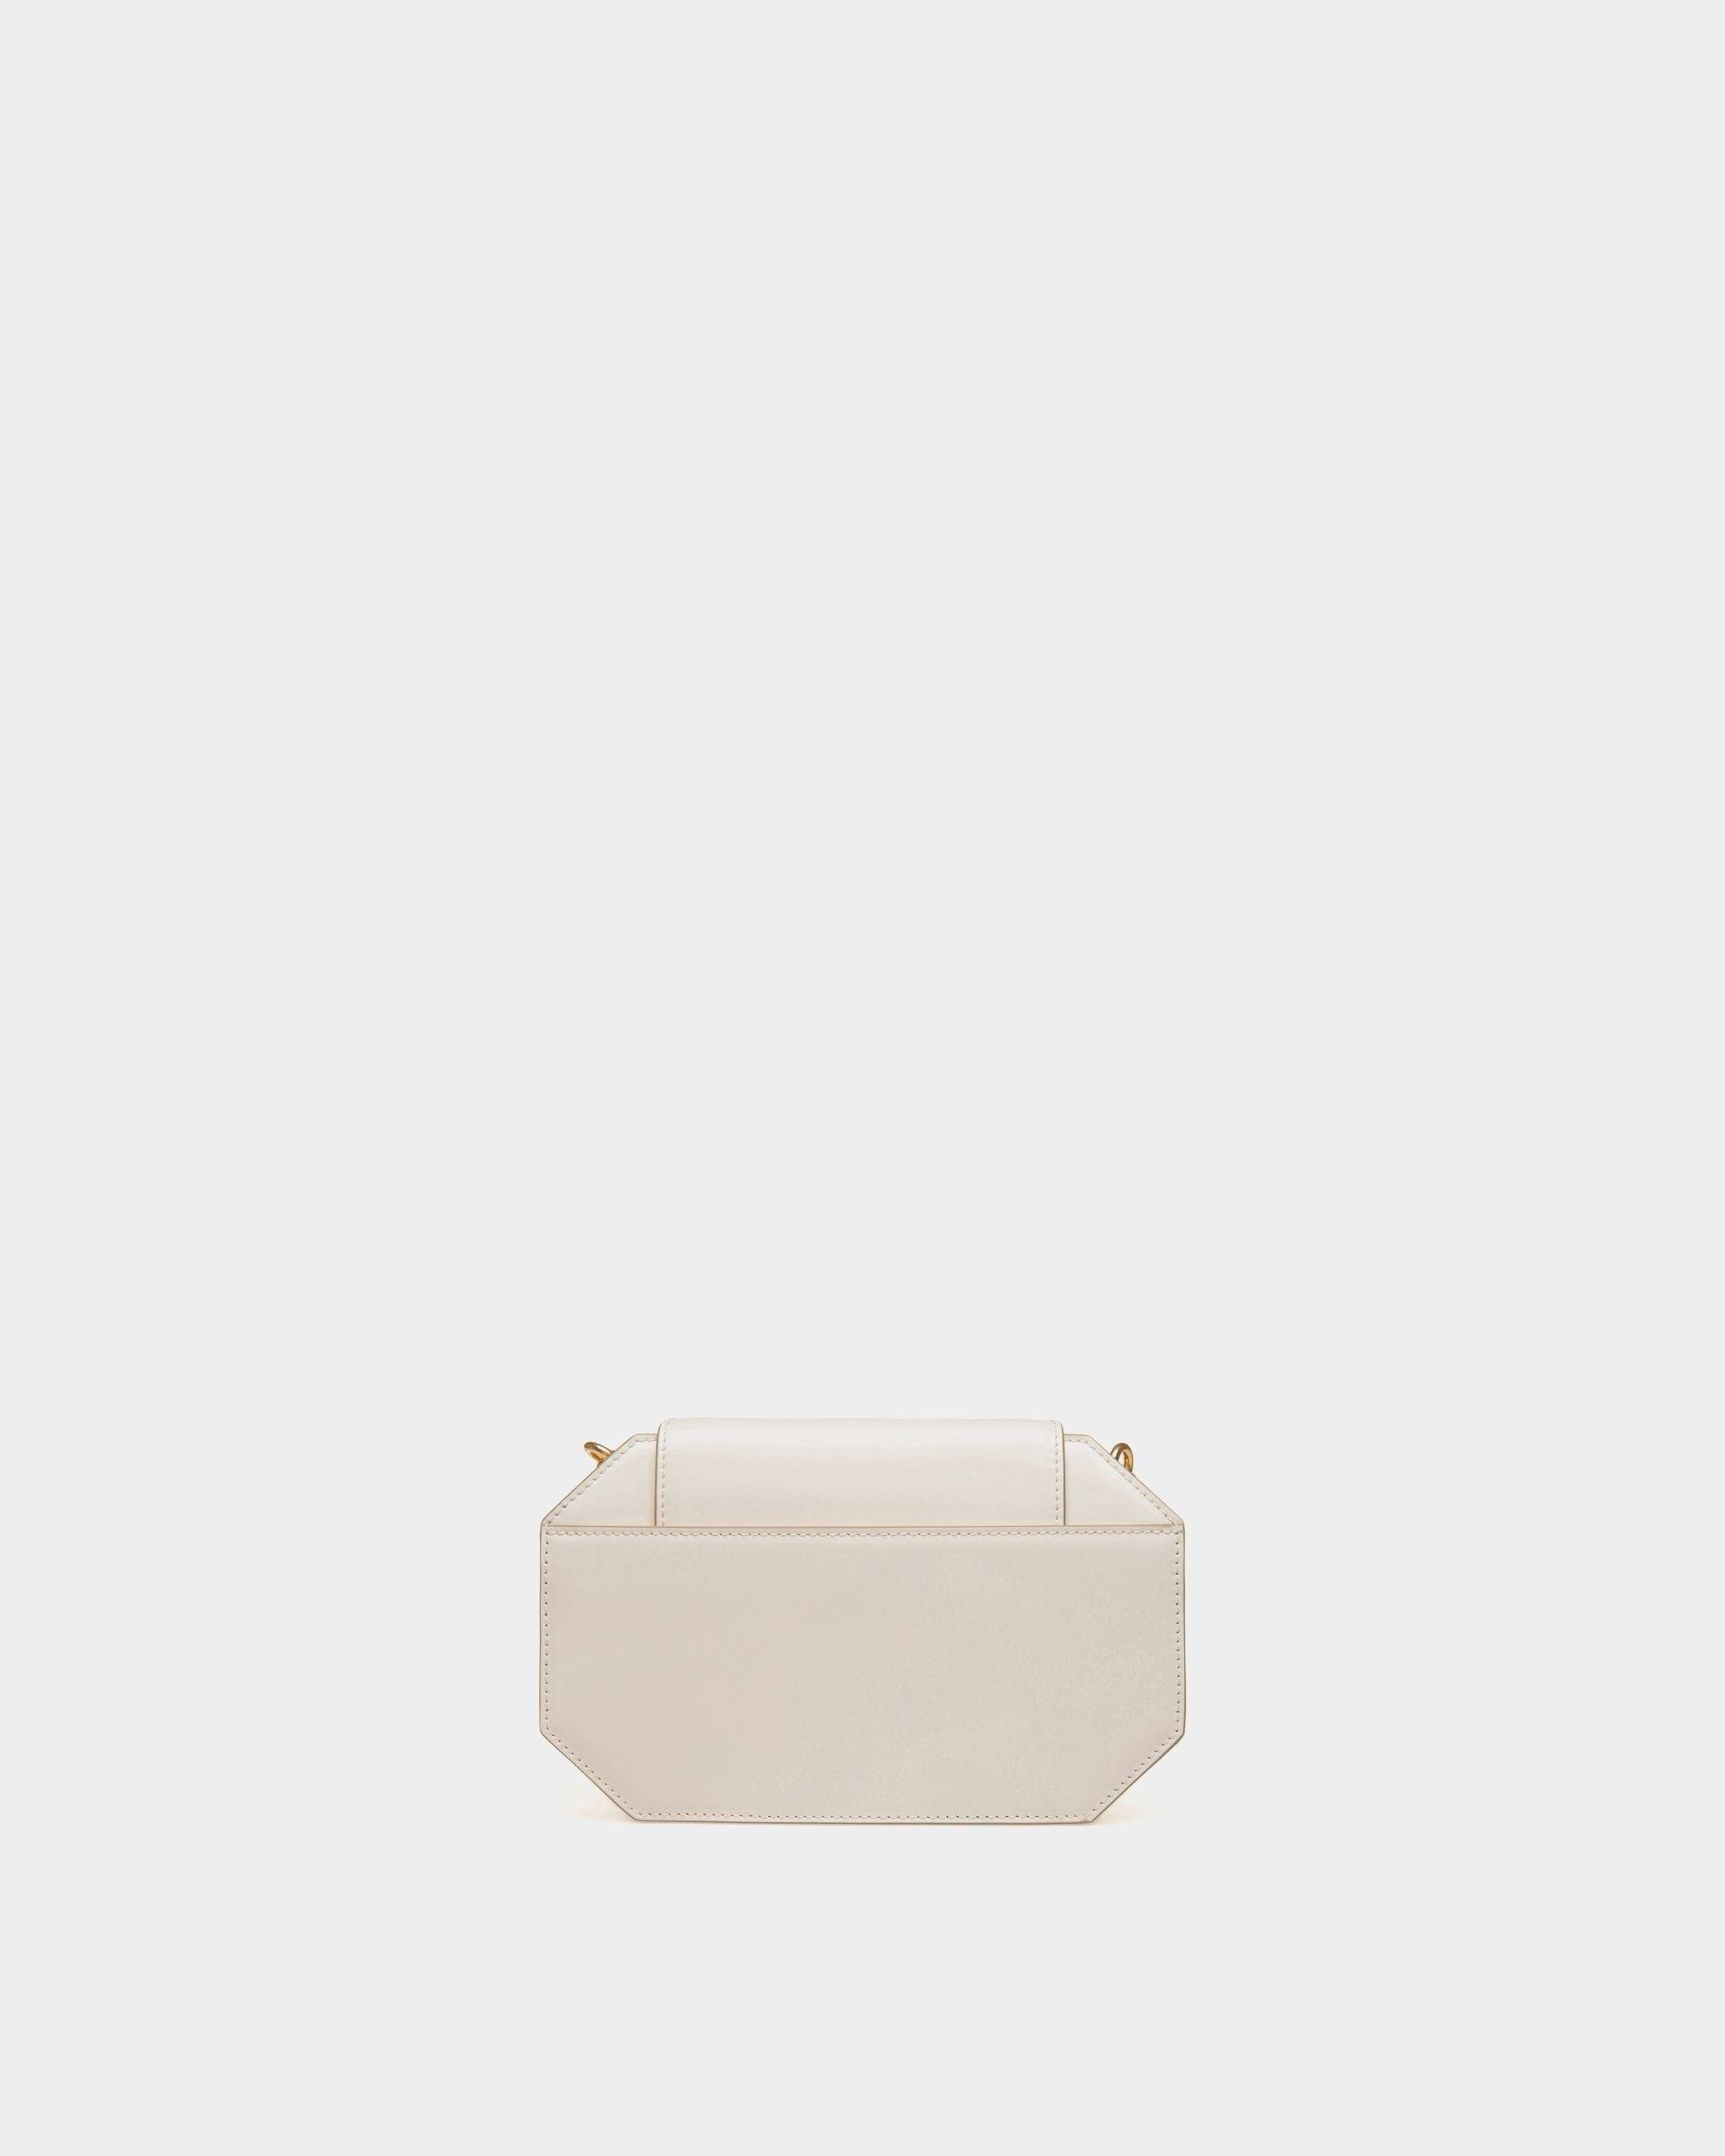 Emblem | Women's Mini Bag in White Brushed Leather | Bally | Still Life Open / Inside